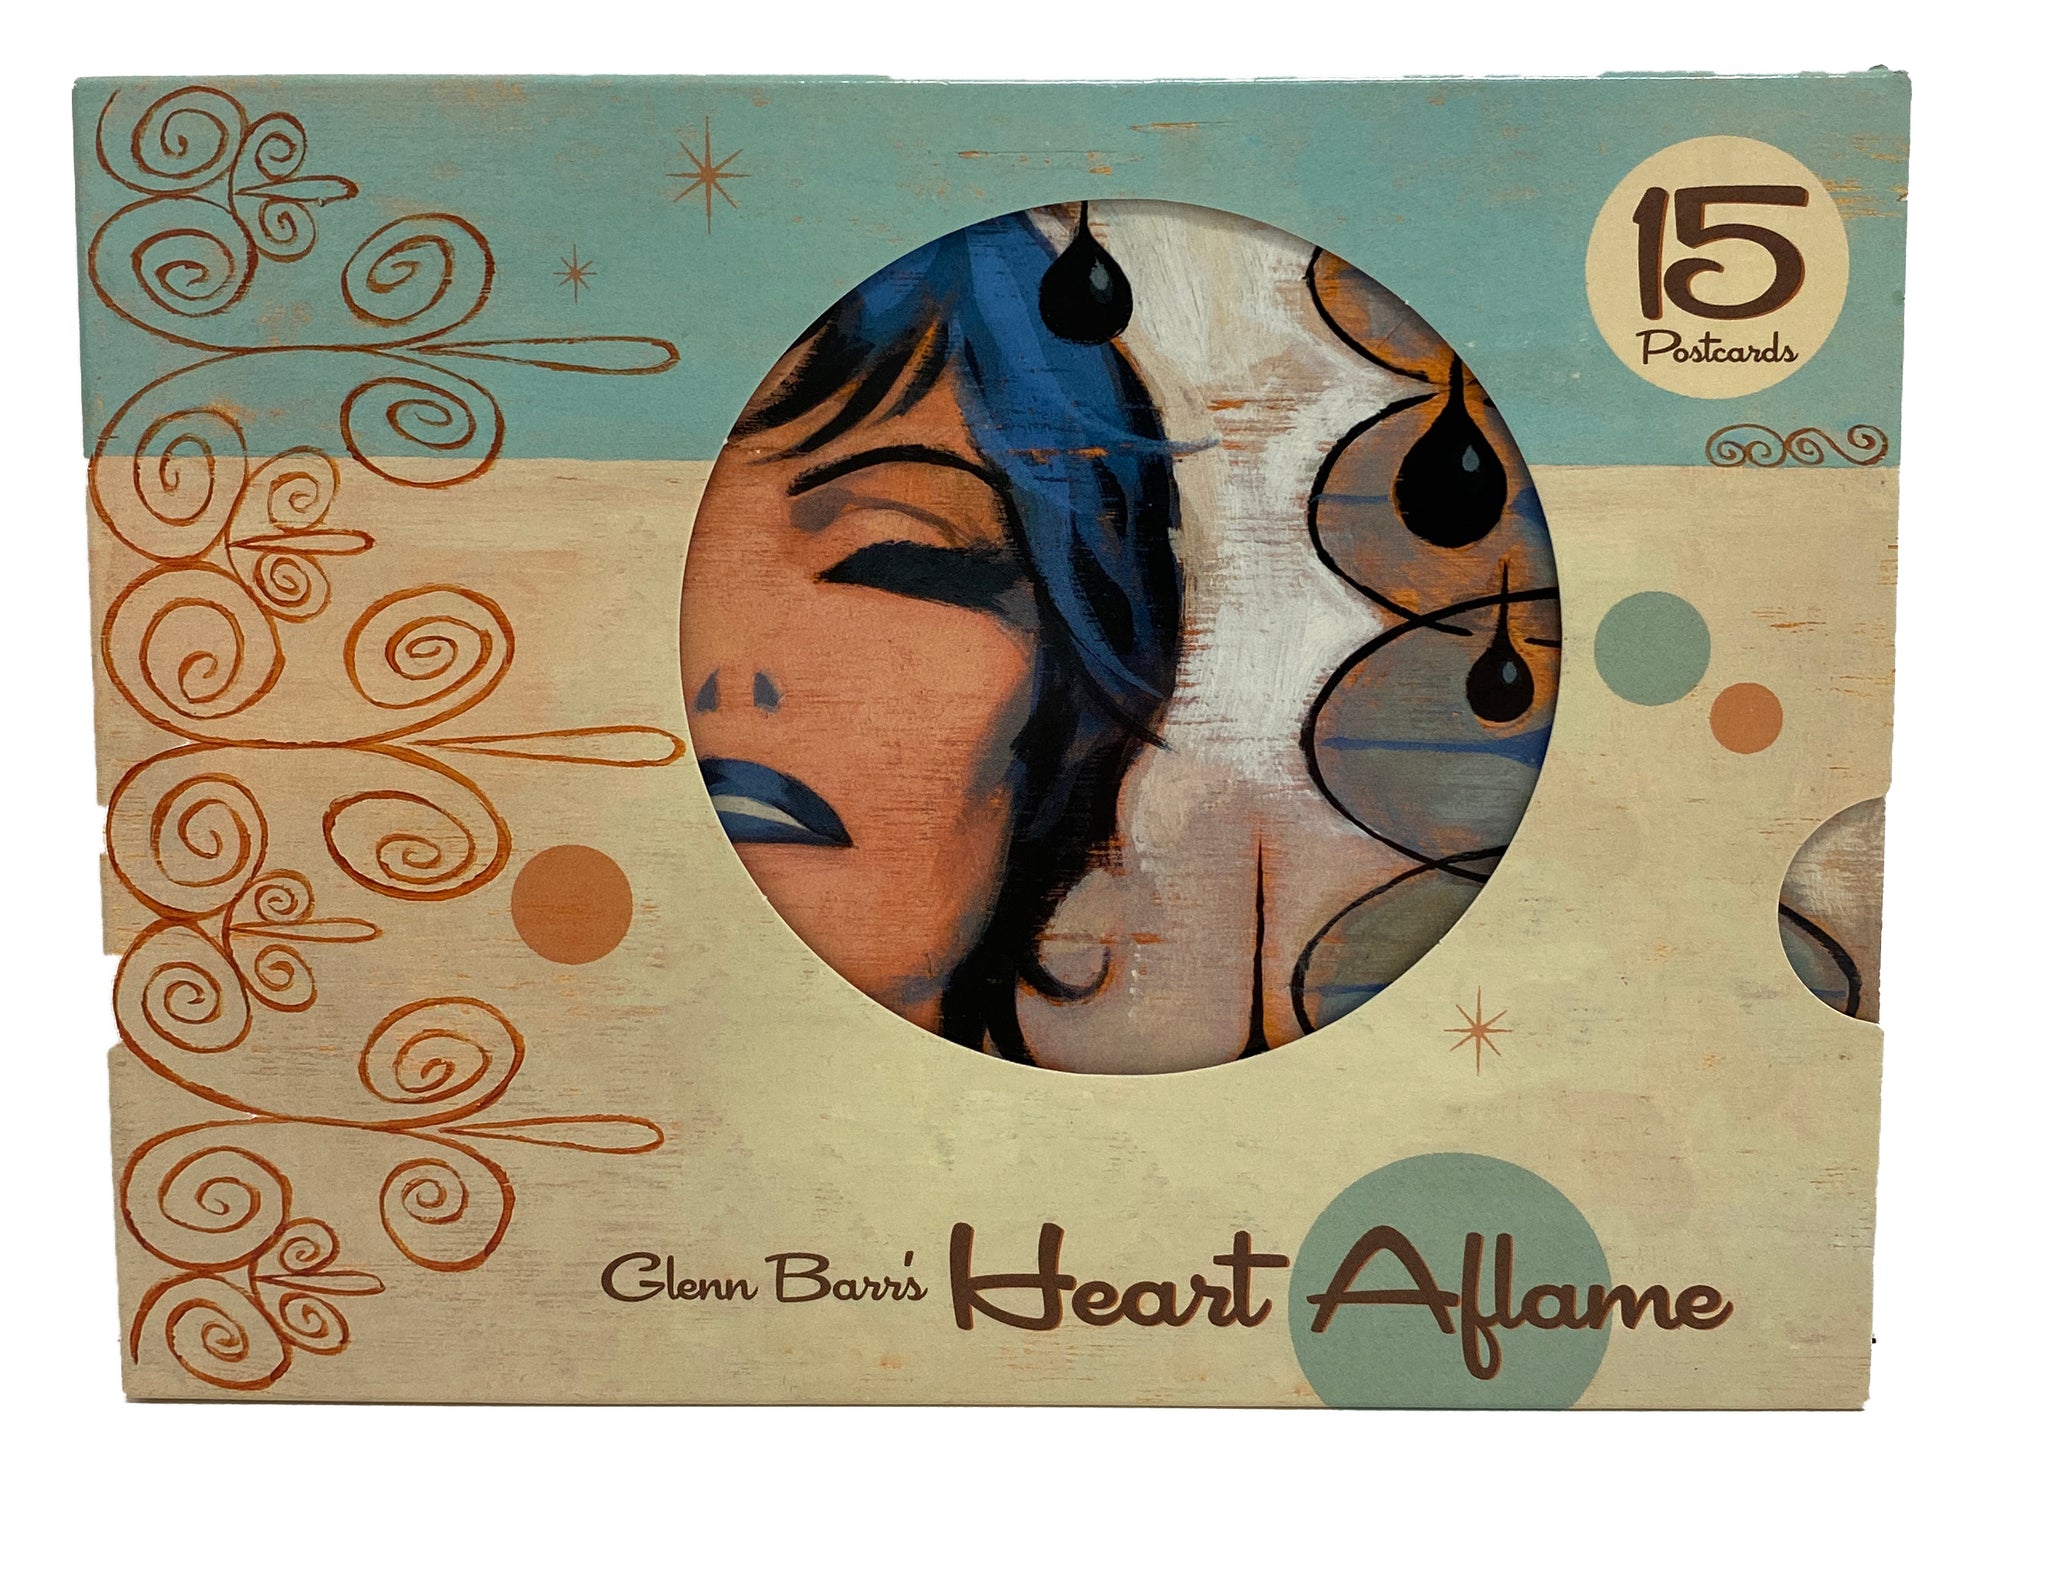 Heart Aflame Limited Edition Postcards • Glenn Barr